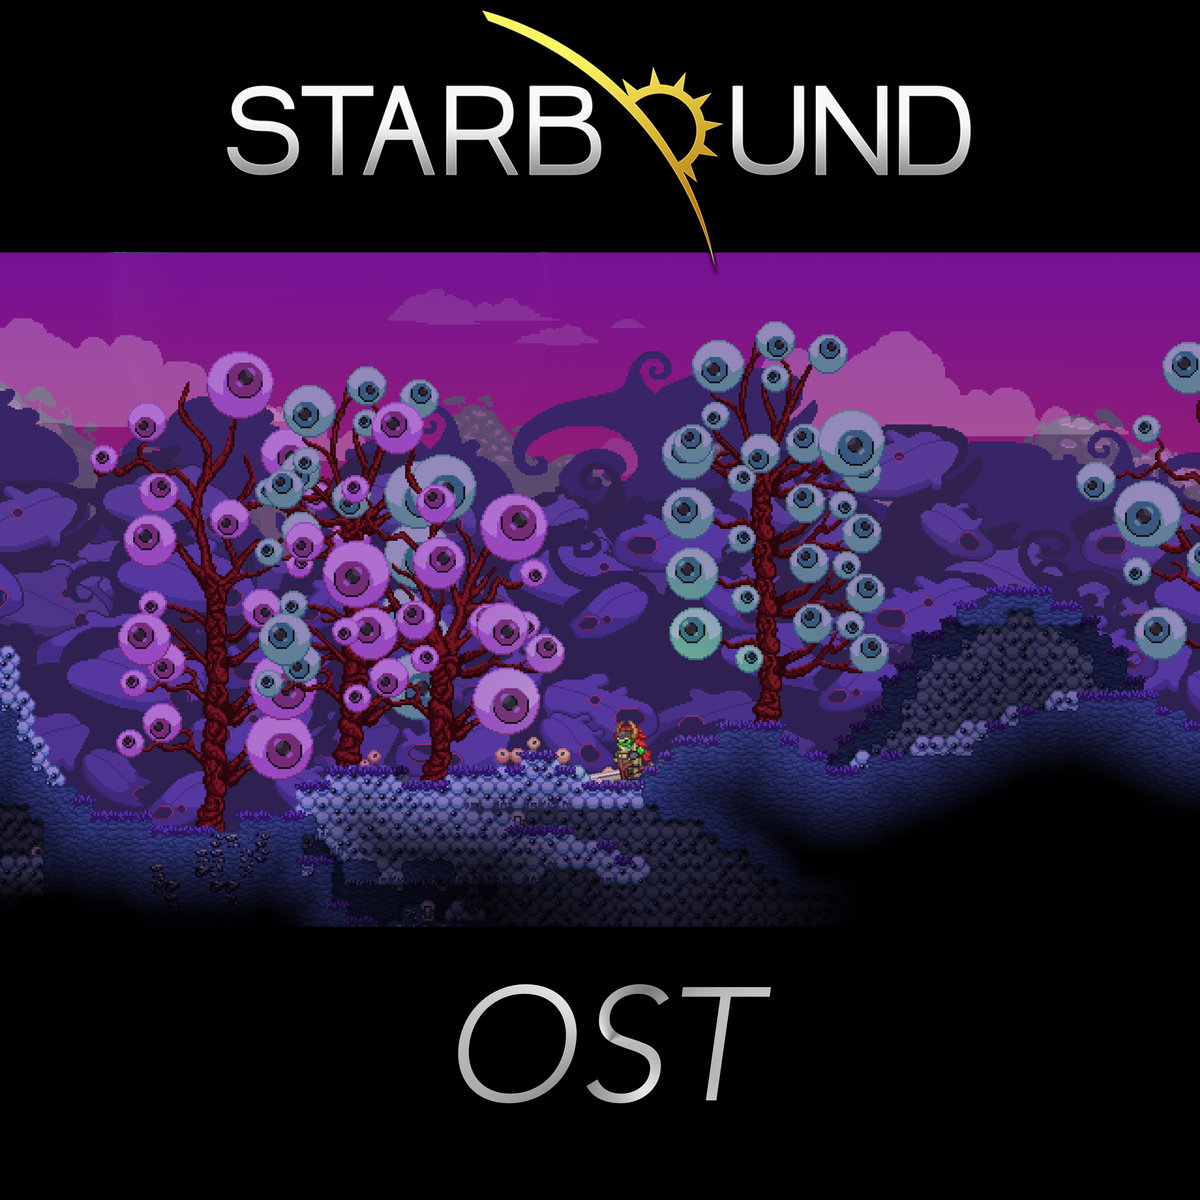 Starbound - Soundtrack Download Free